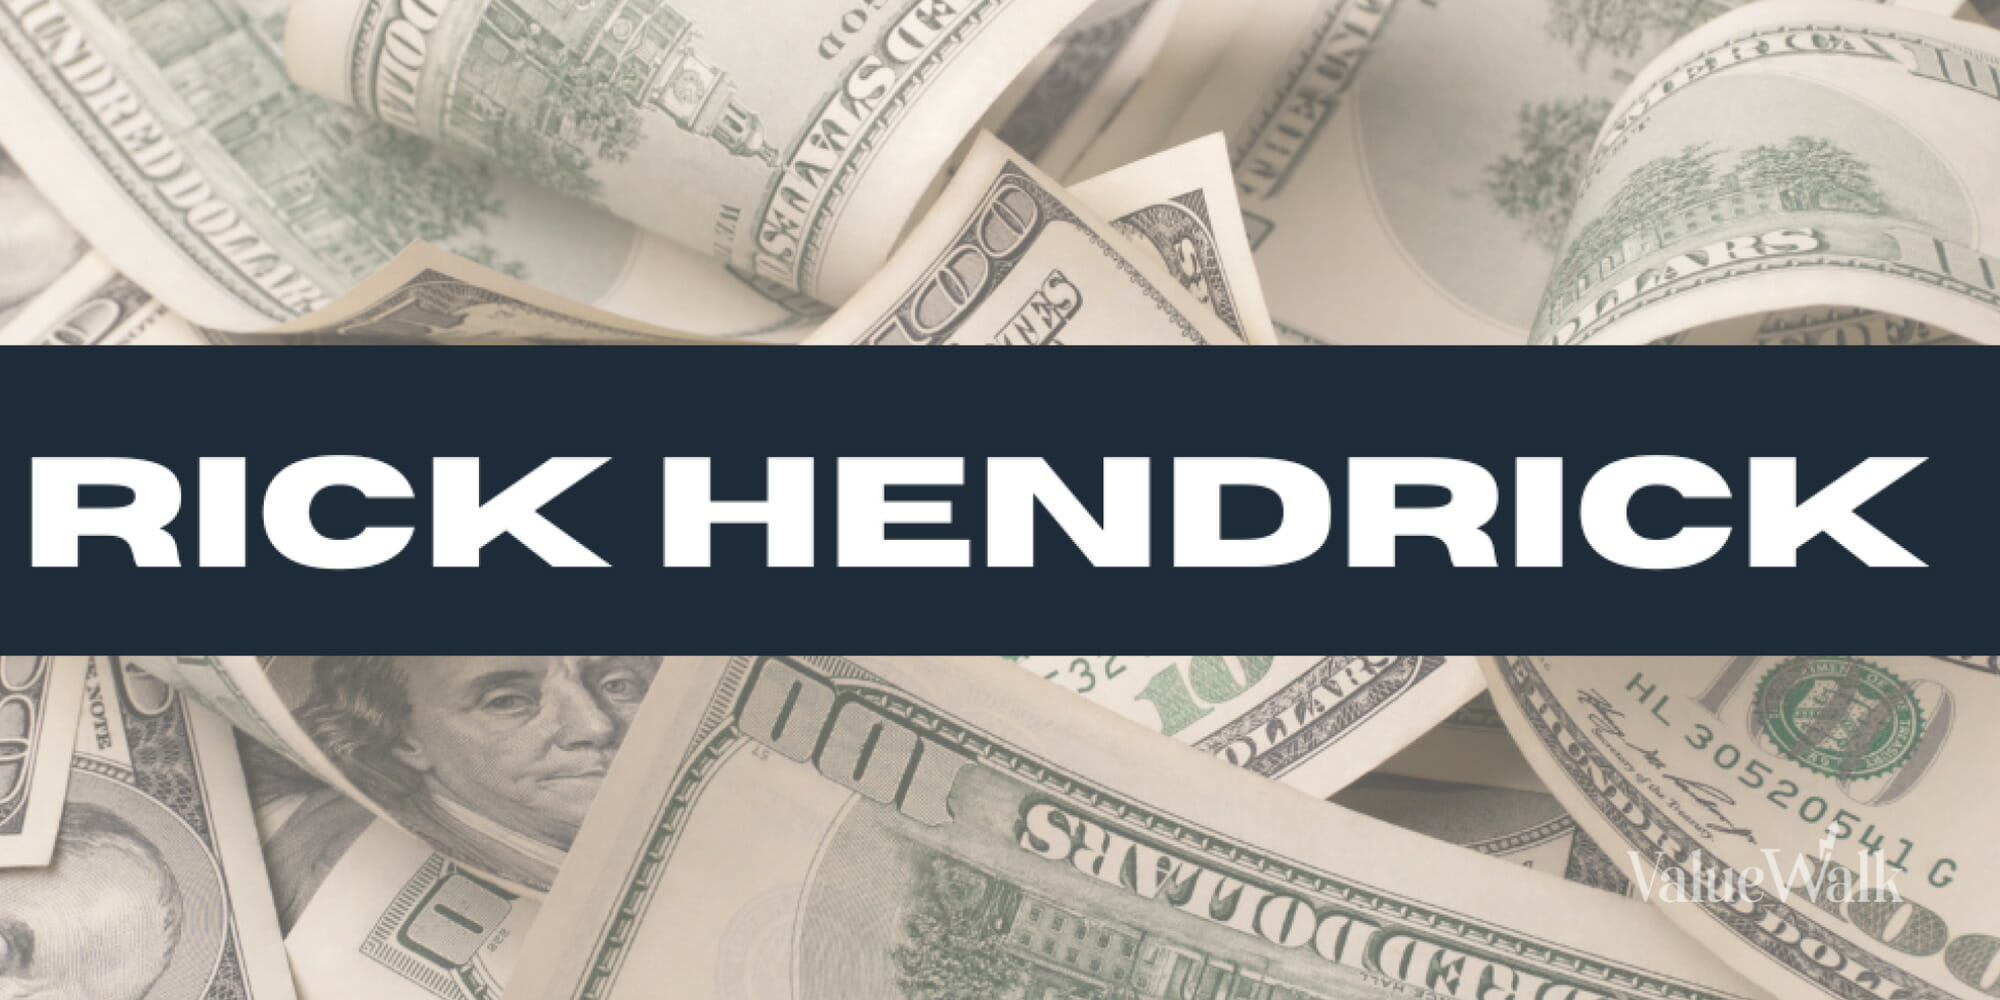 net worth of rich hendrick